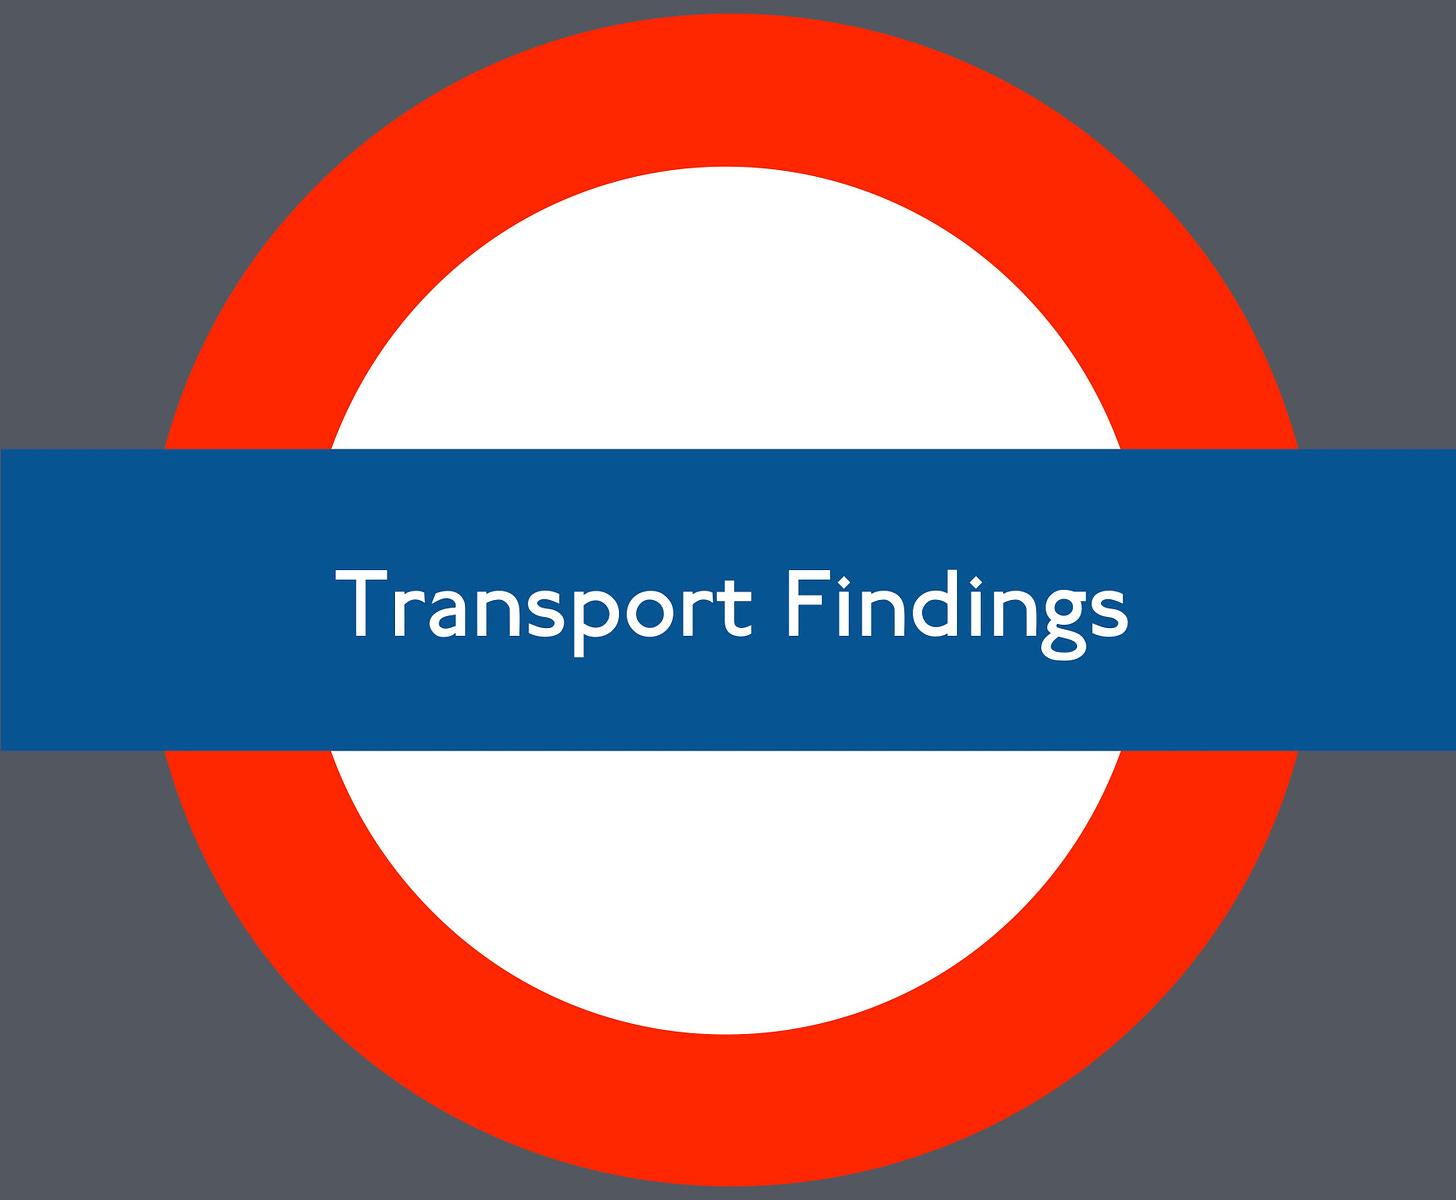 Transport Findings